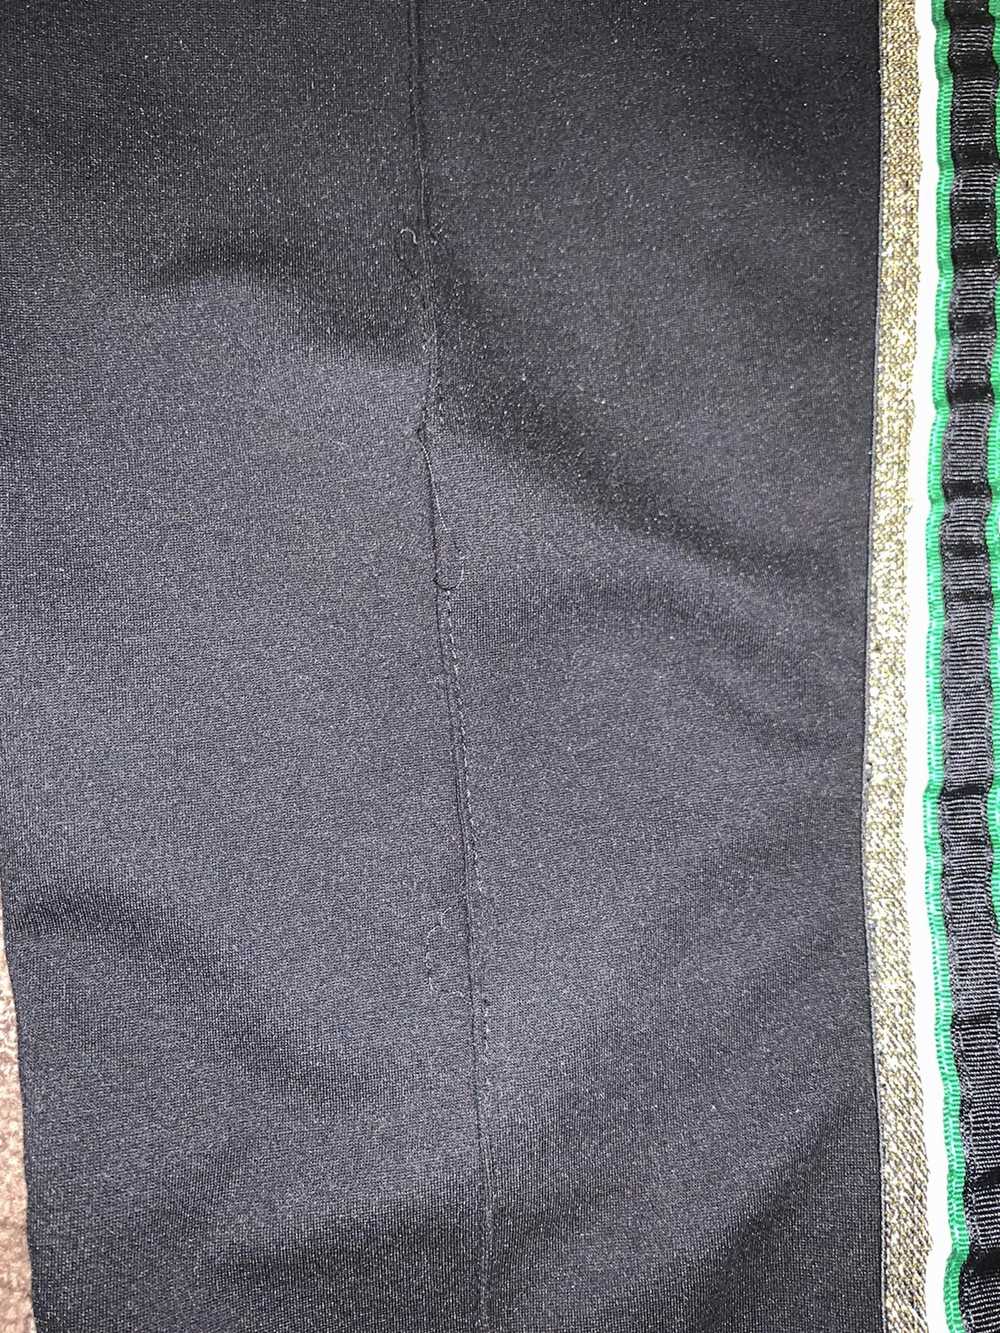 Rhude Rhude black tuxedo pants green stripe - image 6